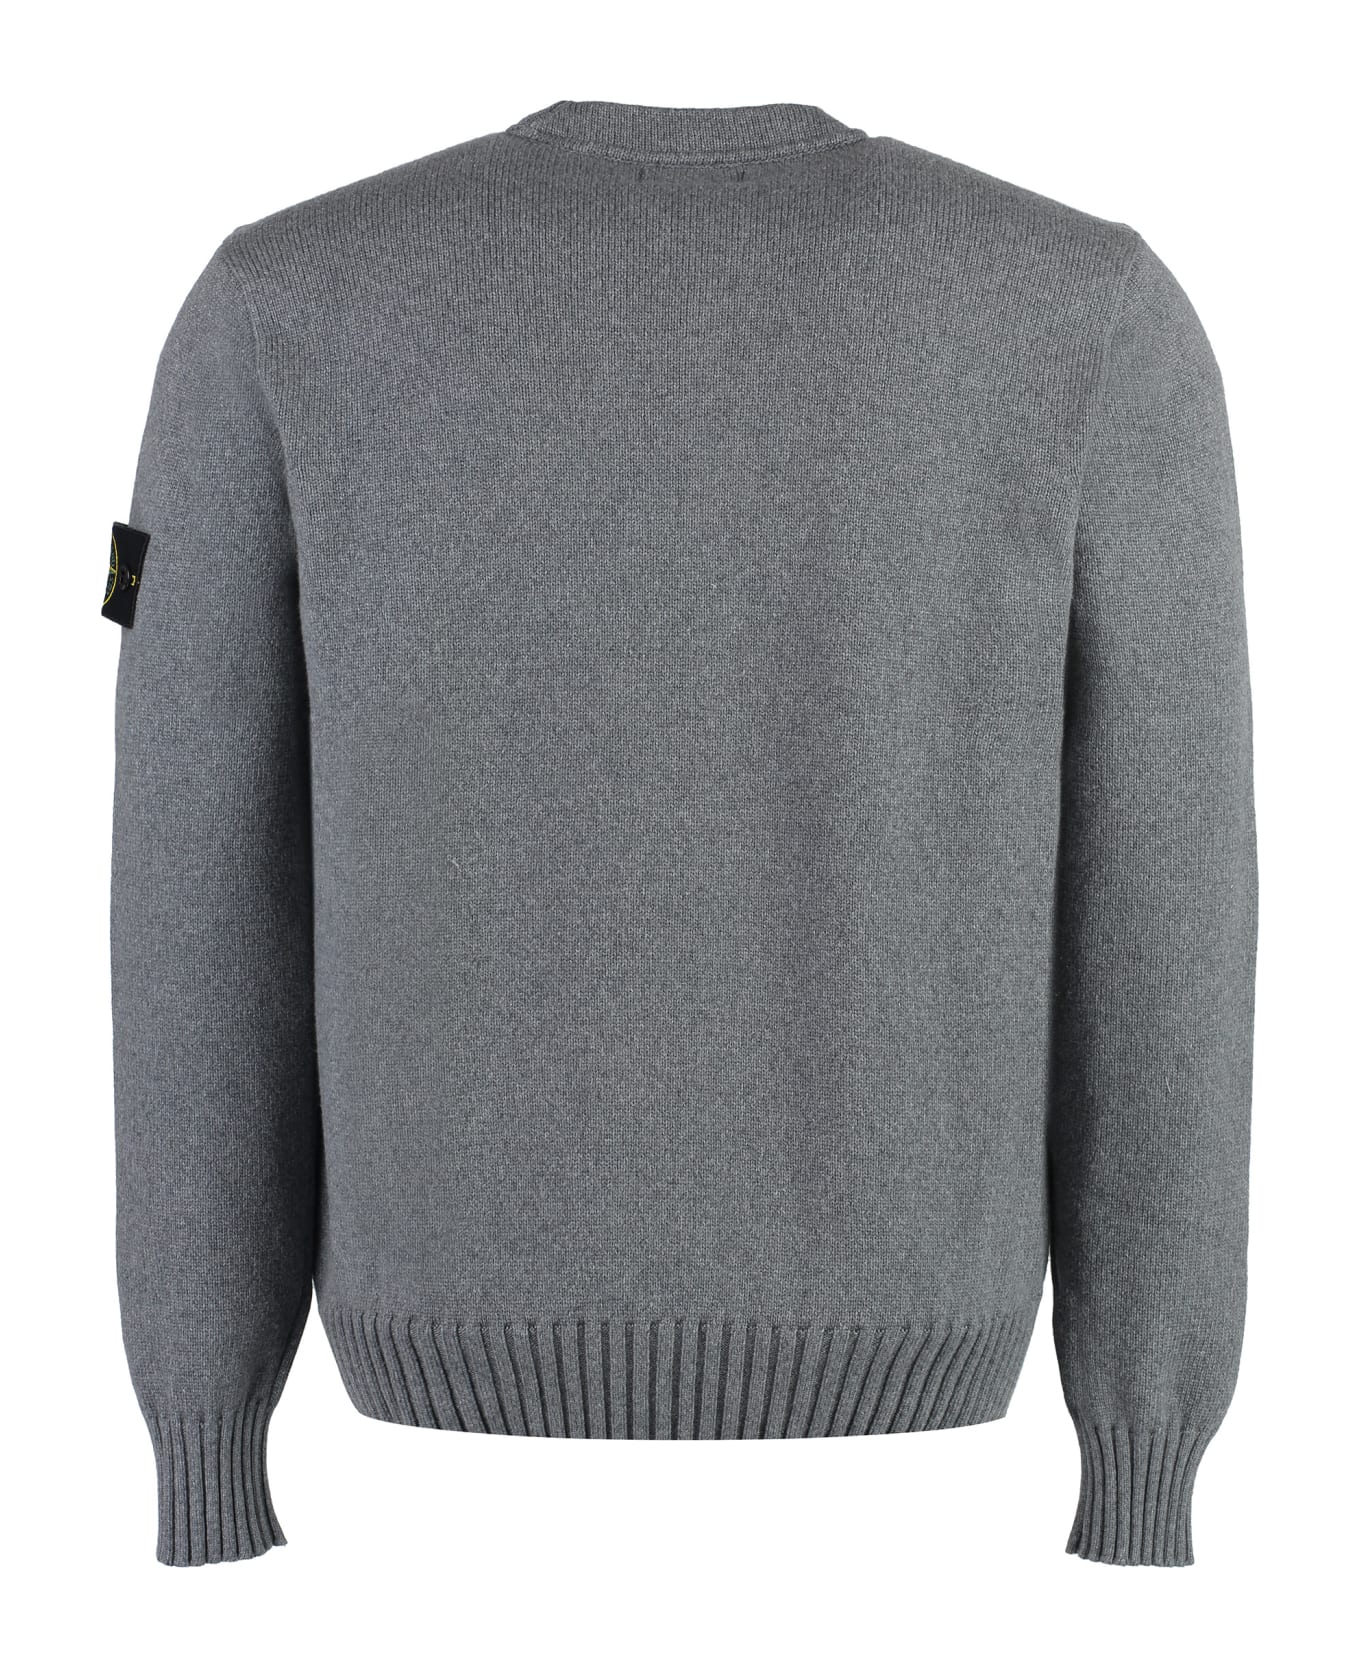 Stone Island Cotton Blend Crew-neck Sweater - grey